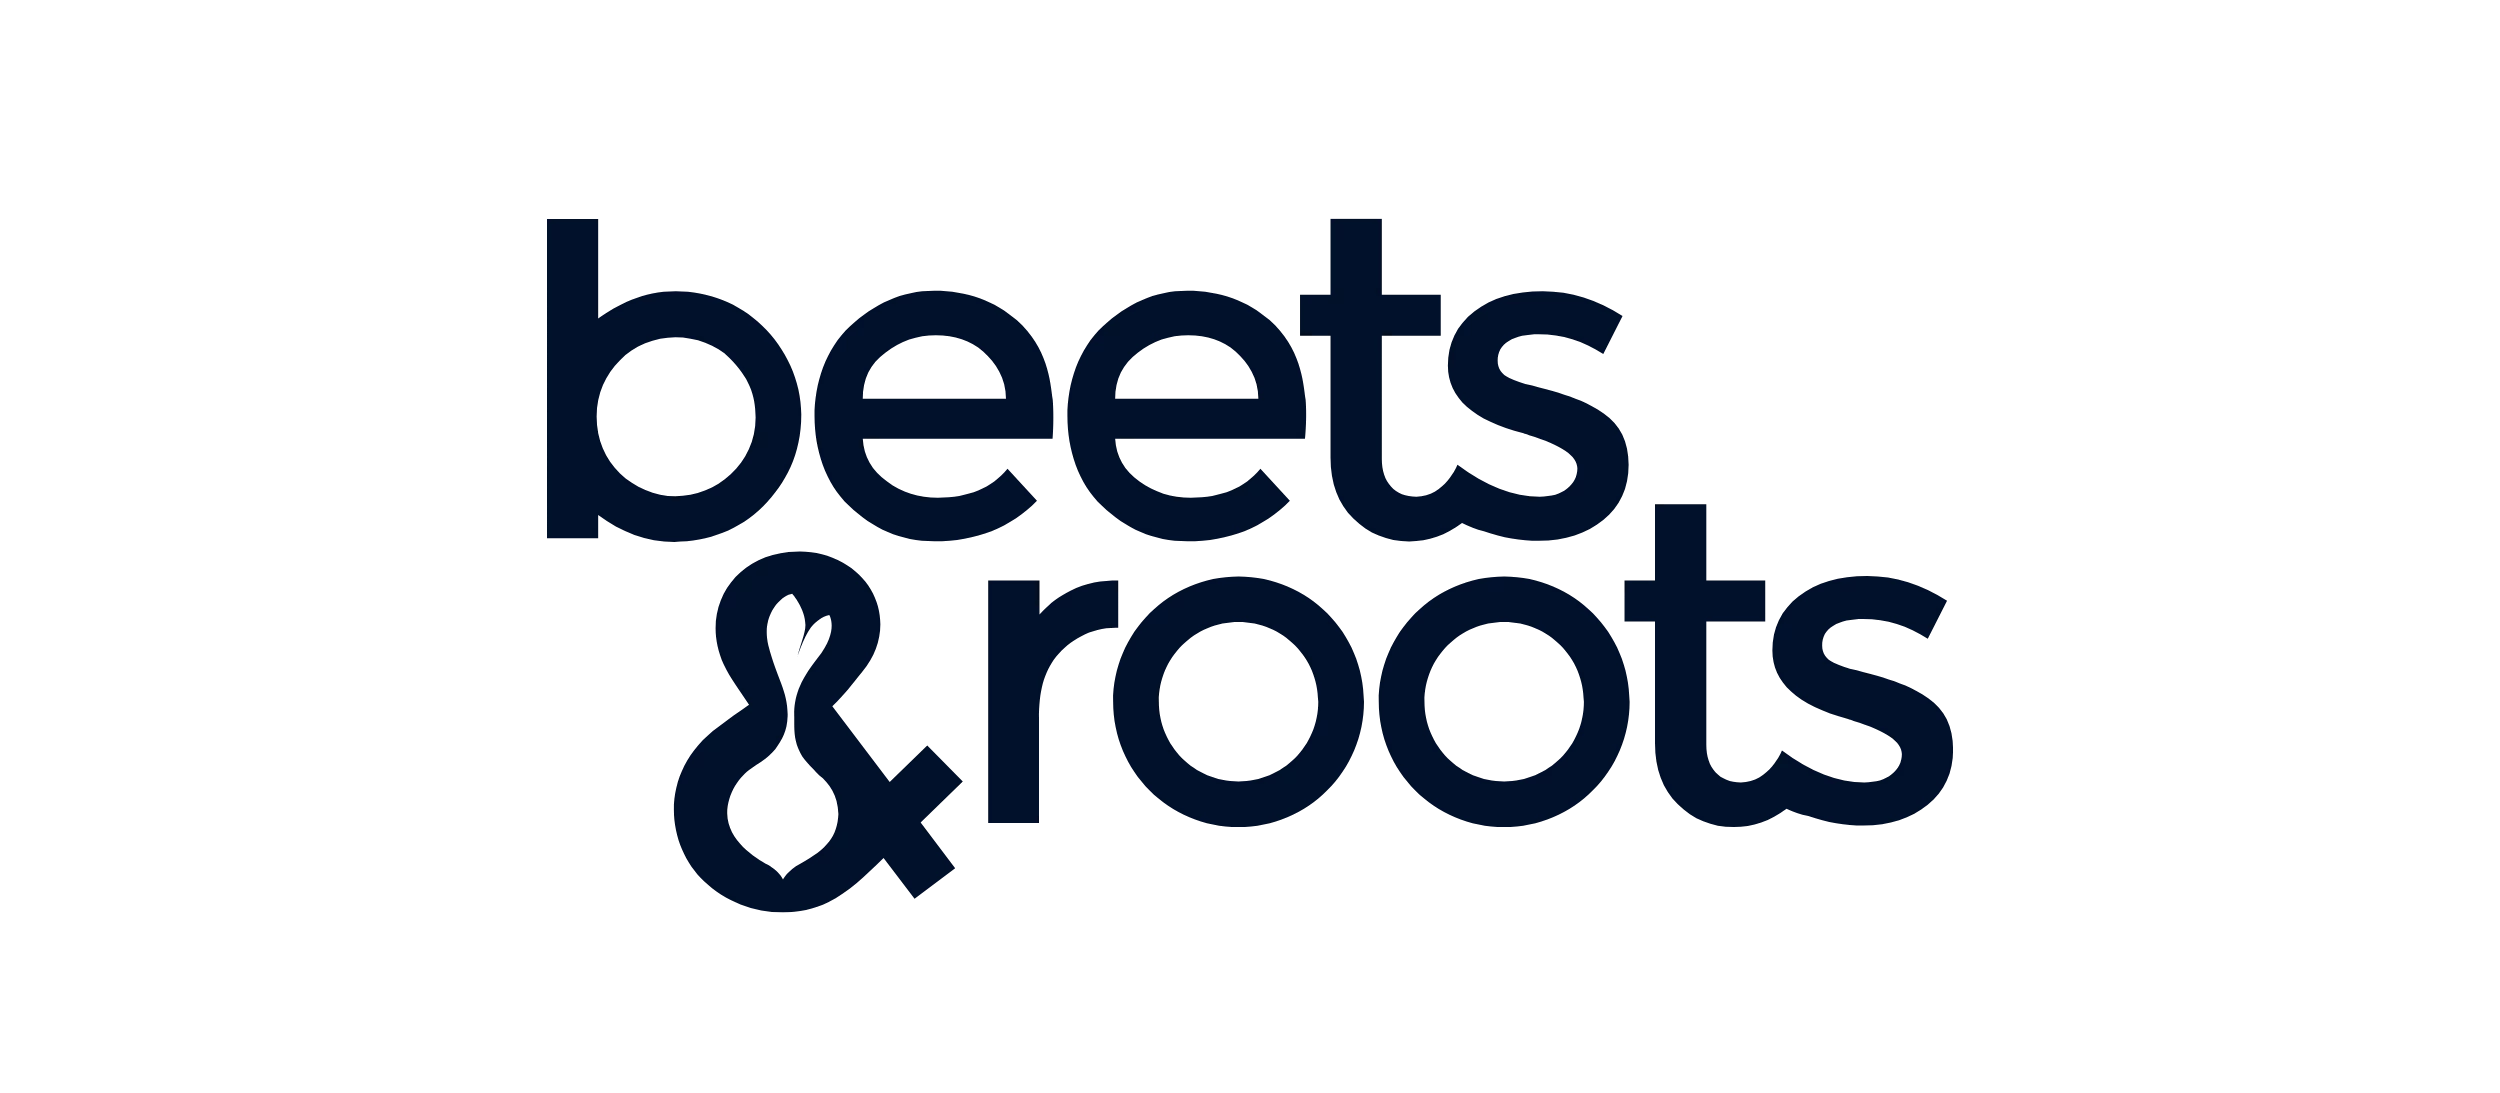 Beets & Roots logo